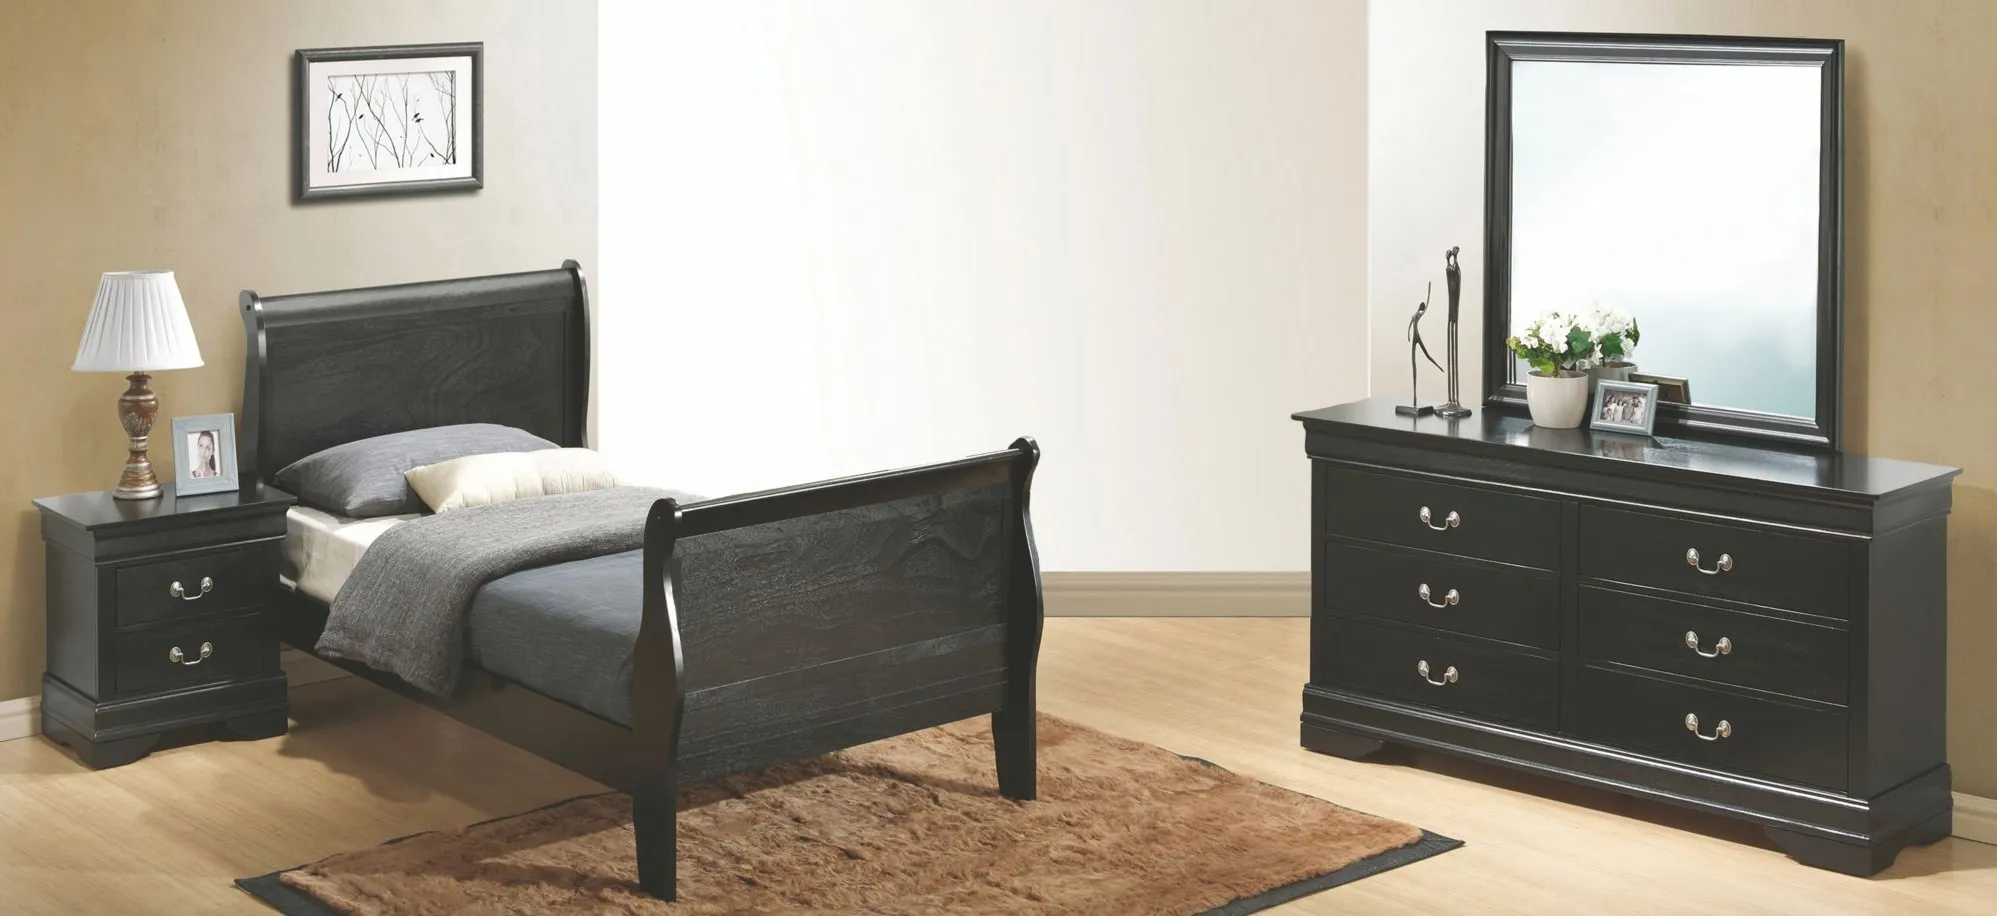 Rossie 4-pc. Sleigh Bedroom Set in Black by Glory Furniture